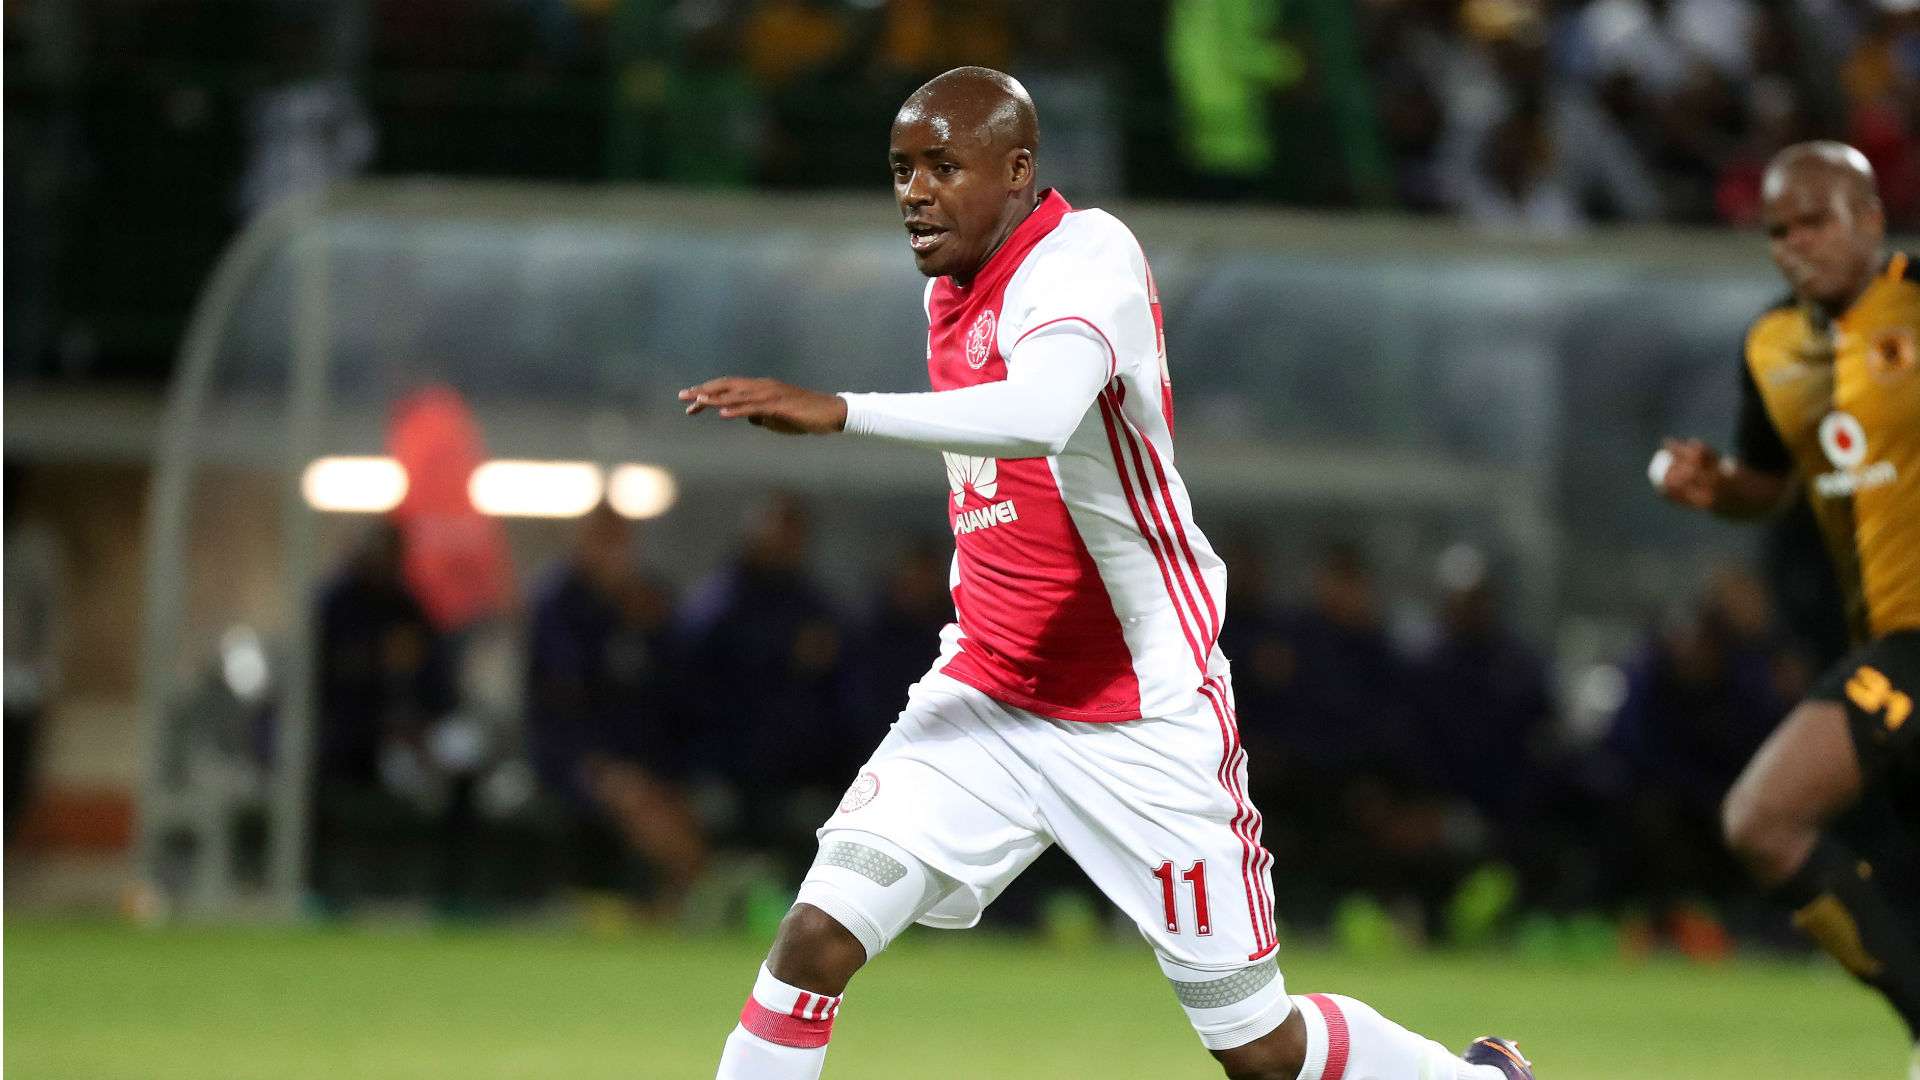 Bantu Mzwakali of Ajax Cape Town vs Kaizer Chiefs